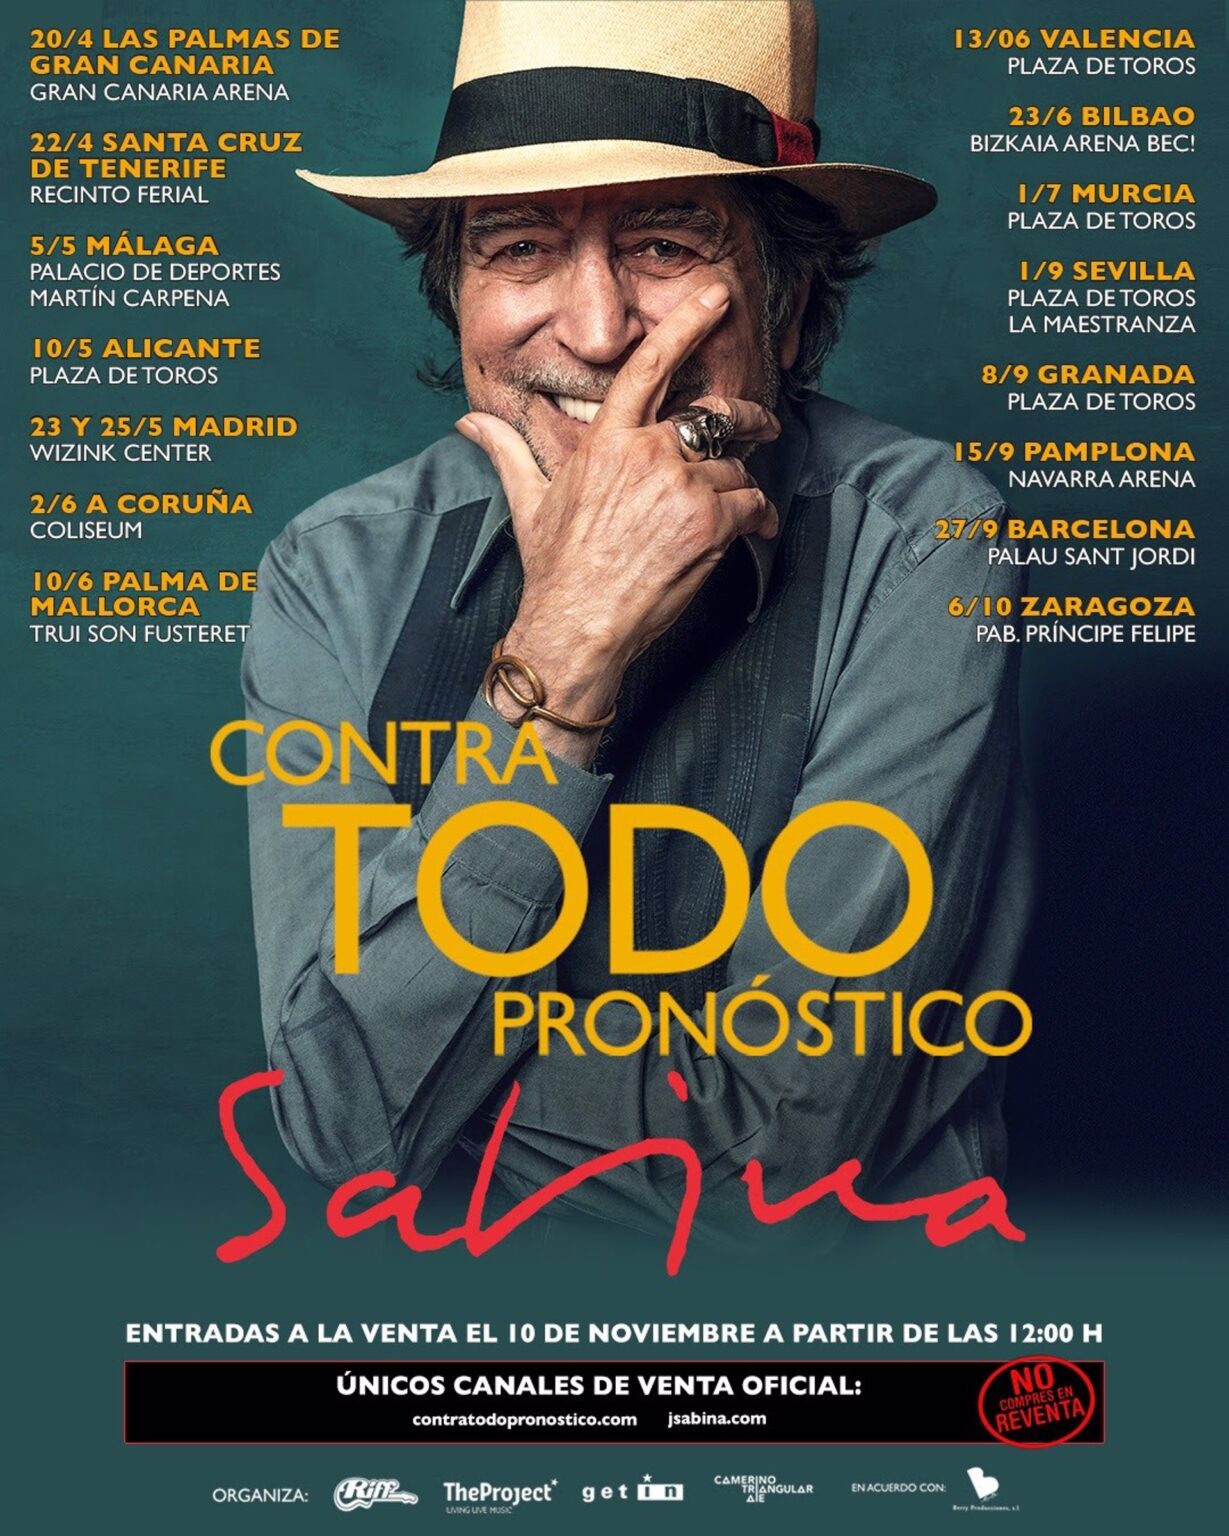 Estas son las fechas de la gira 'Contra todo pronóstico' de Joaquín Sabina